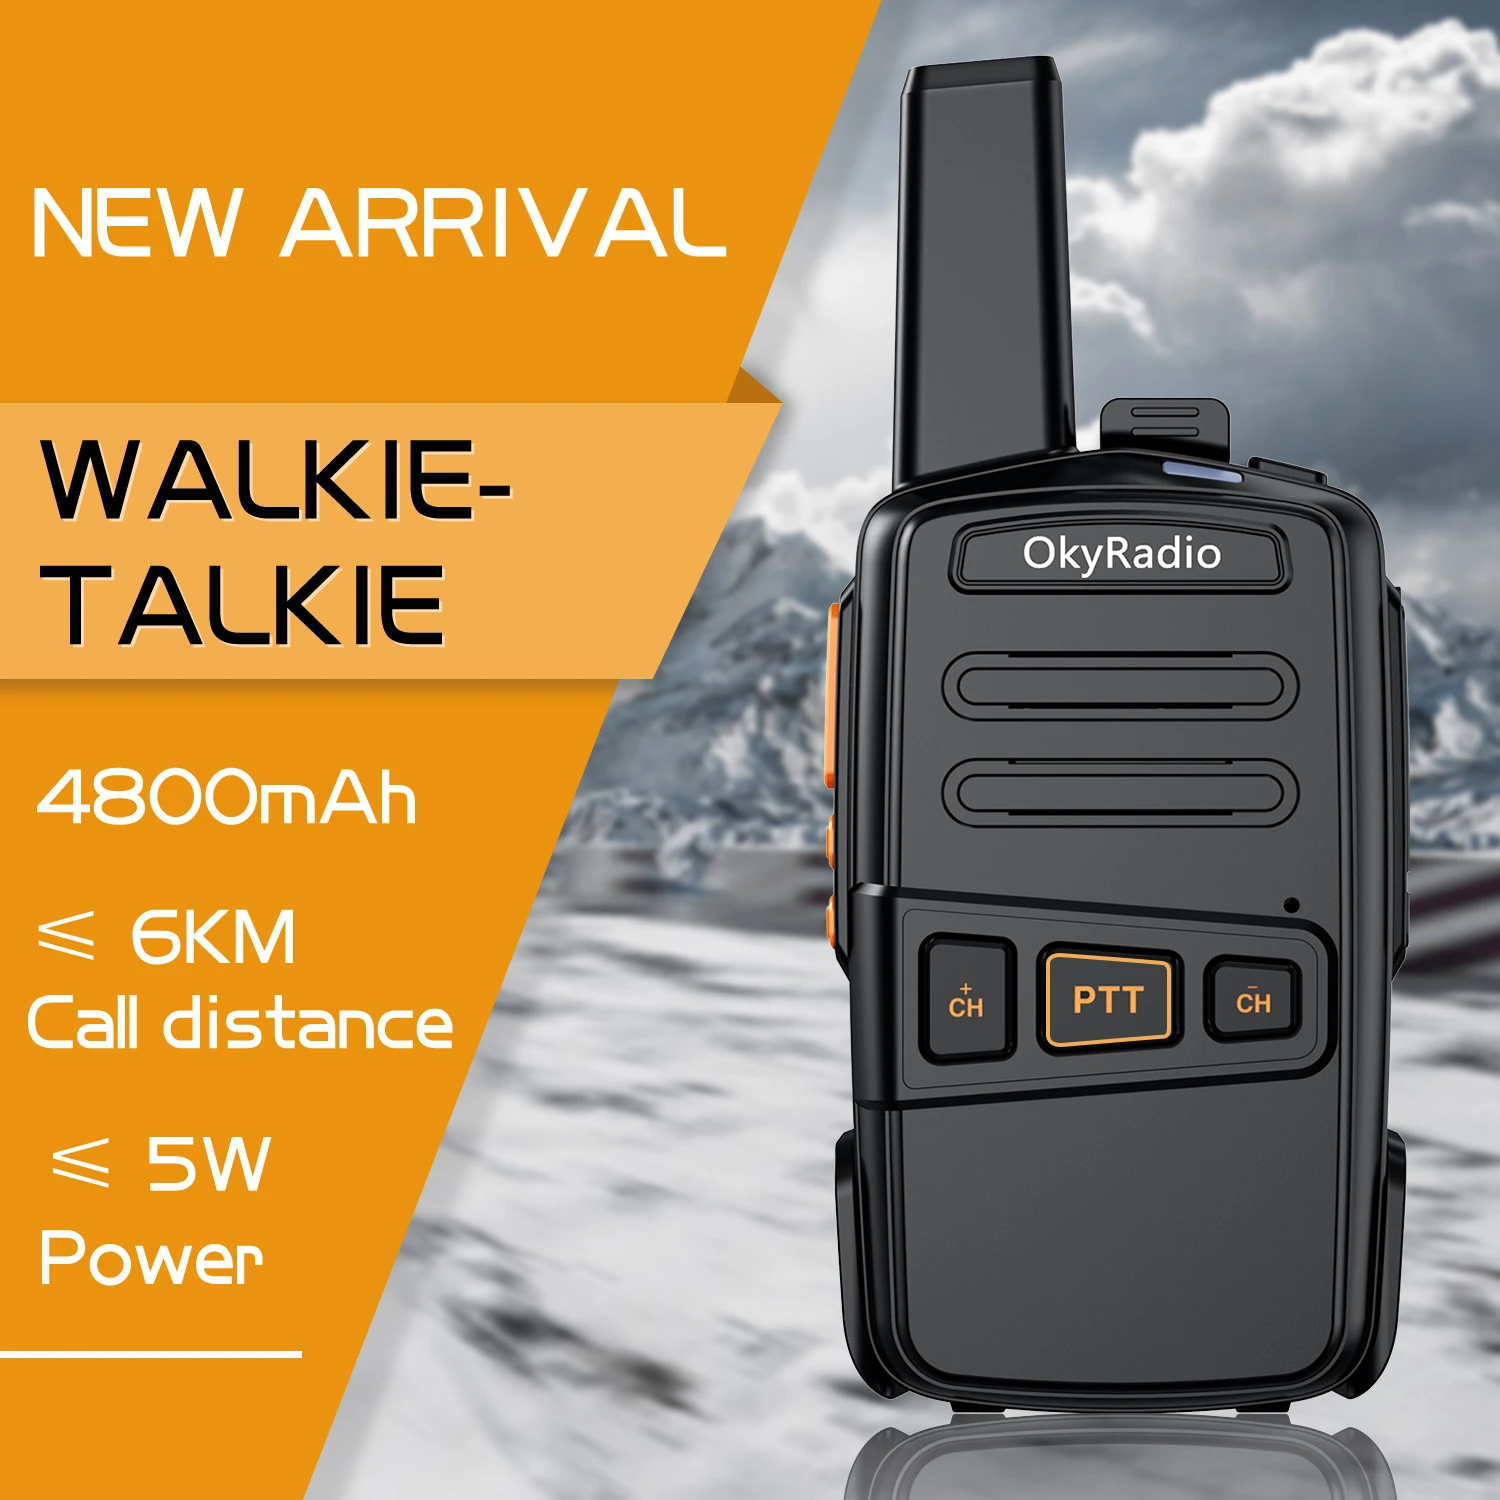 walkie talkie online 2022 hot sale 4800mah okyRadio 5w portable waterproof walkie-talkie 6km call distance suitable for hotel construction sites etc best two way radios